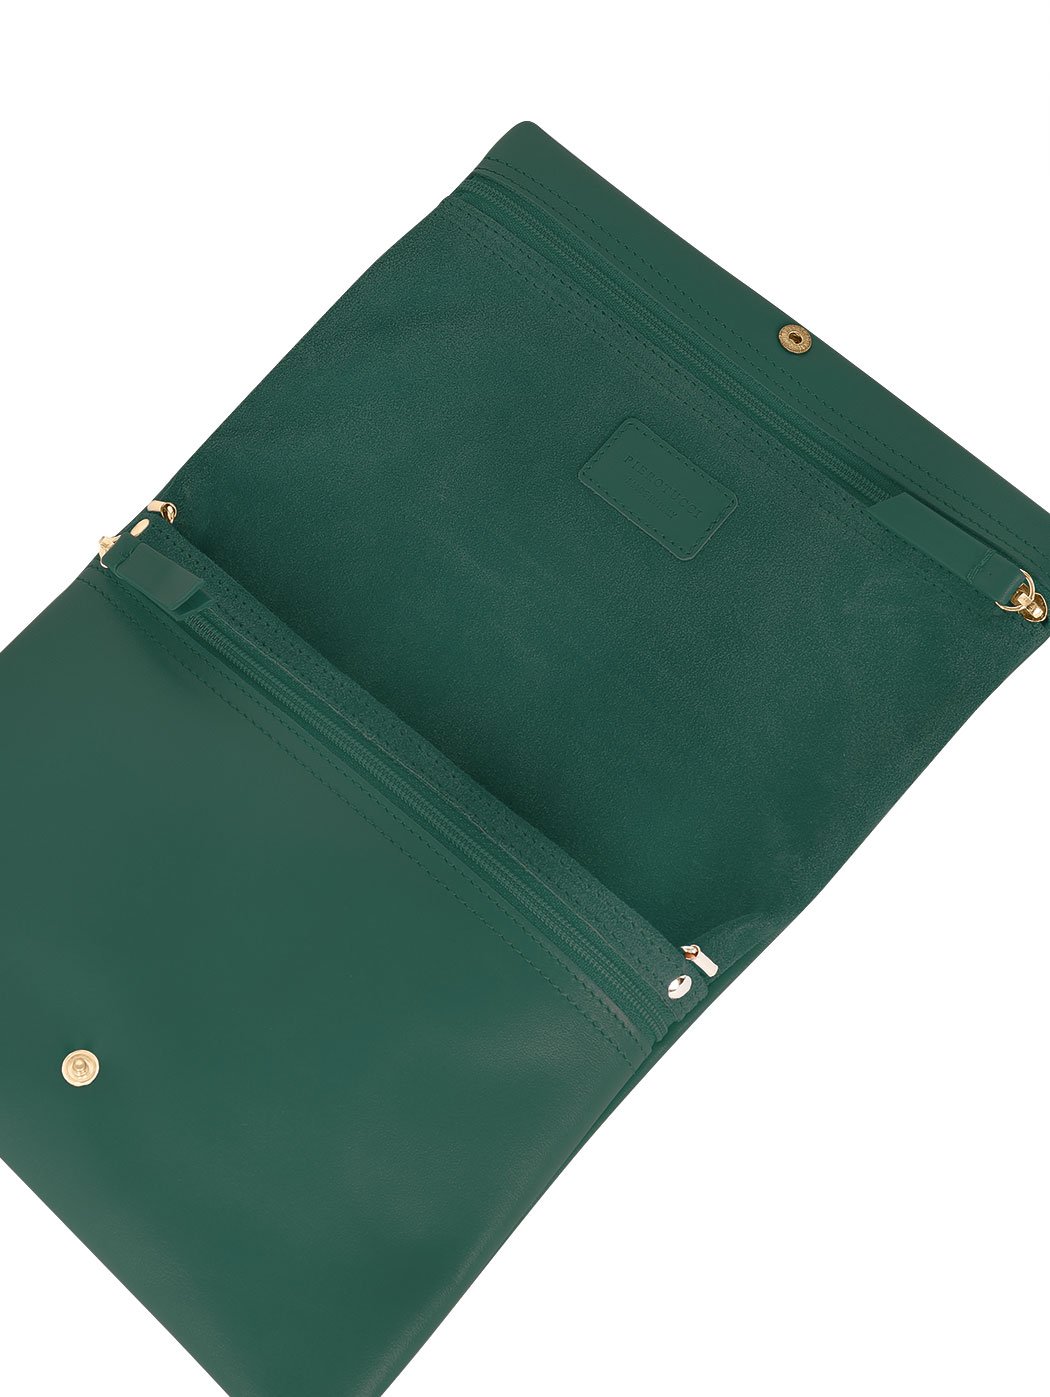 Modest / Simple Dark Green Clutch Bags 2020 Metal Tassel Evening Party  Accessories